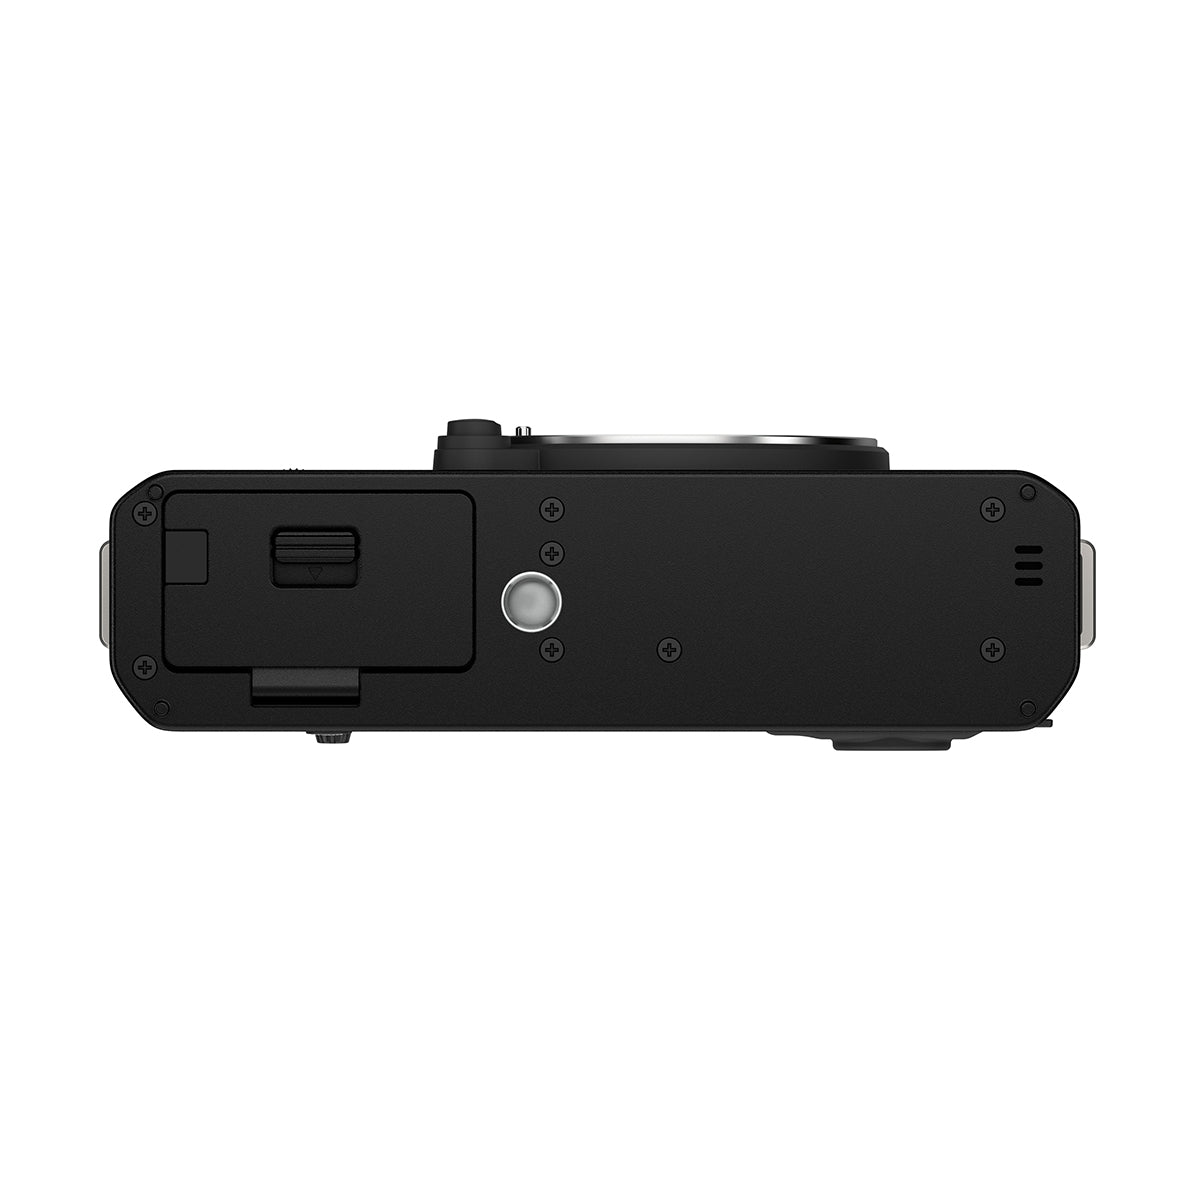 Fujifilm X-E4 Digital Camera Body (Black)